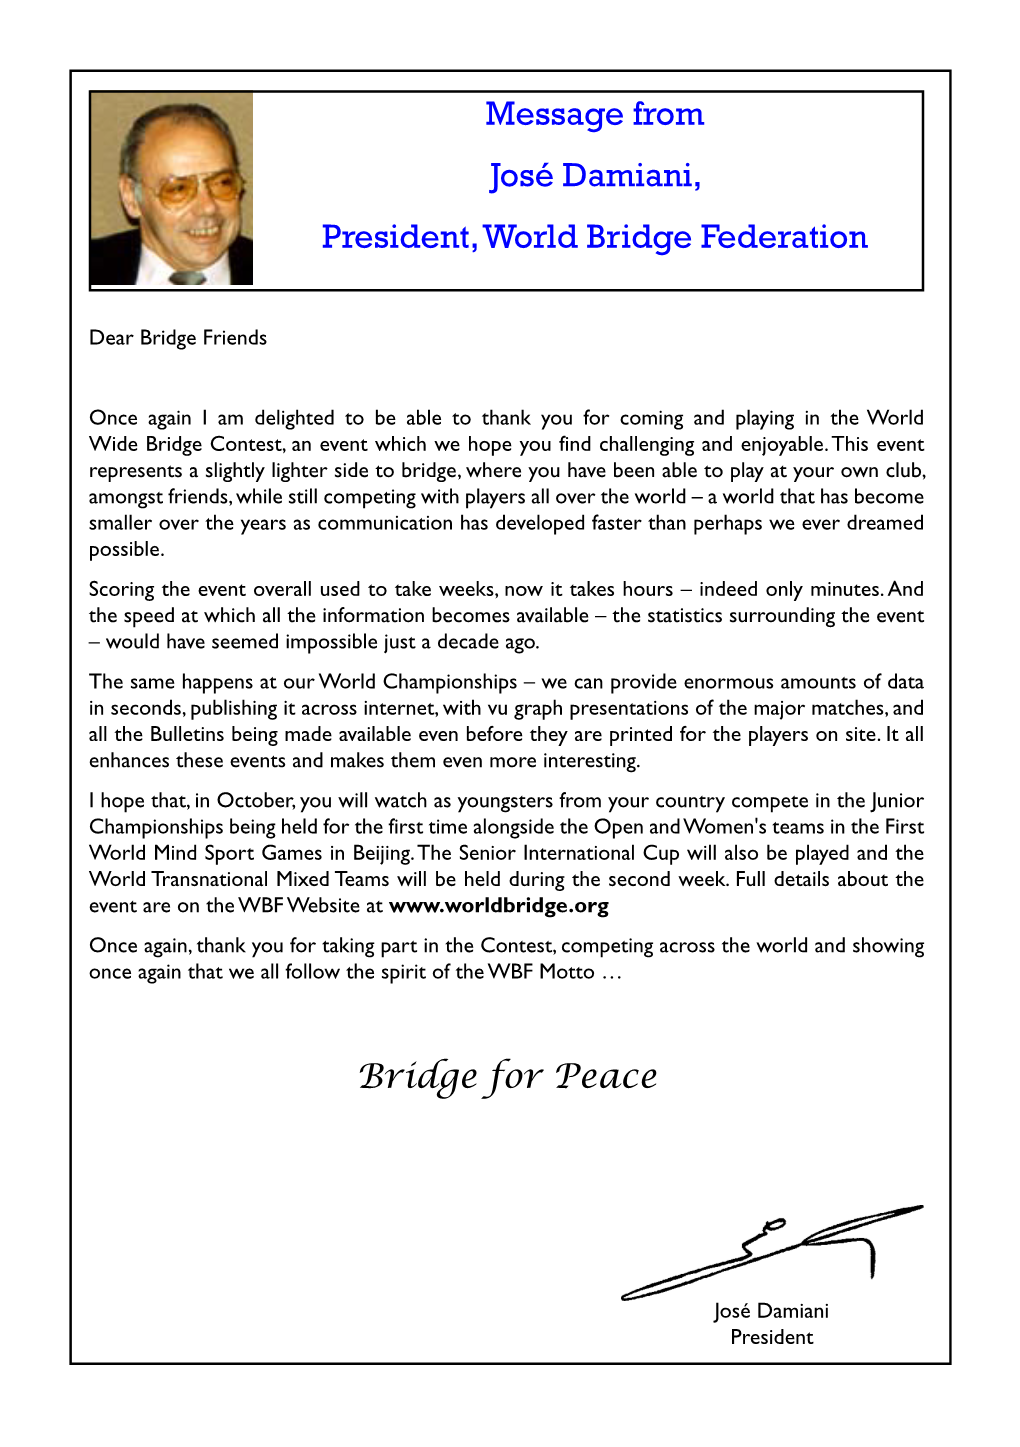 Message from José Damiani, President, World Bridge Federation